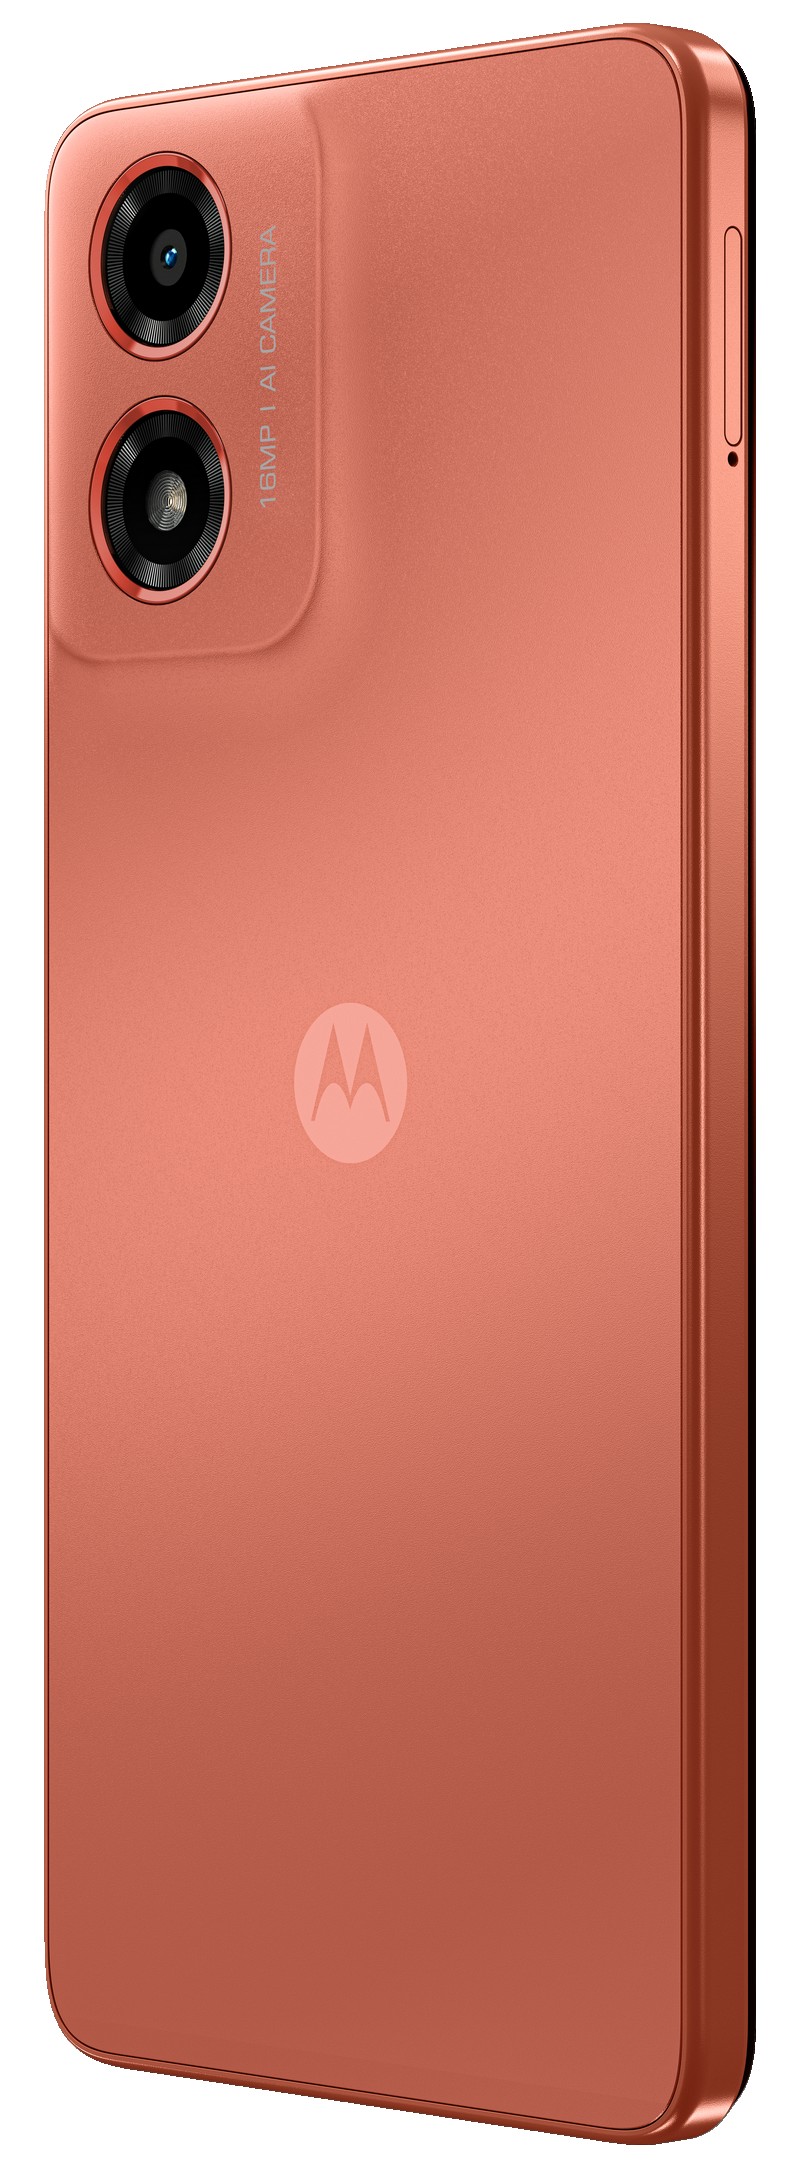 Motorola Moto G04 main camera setup